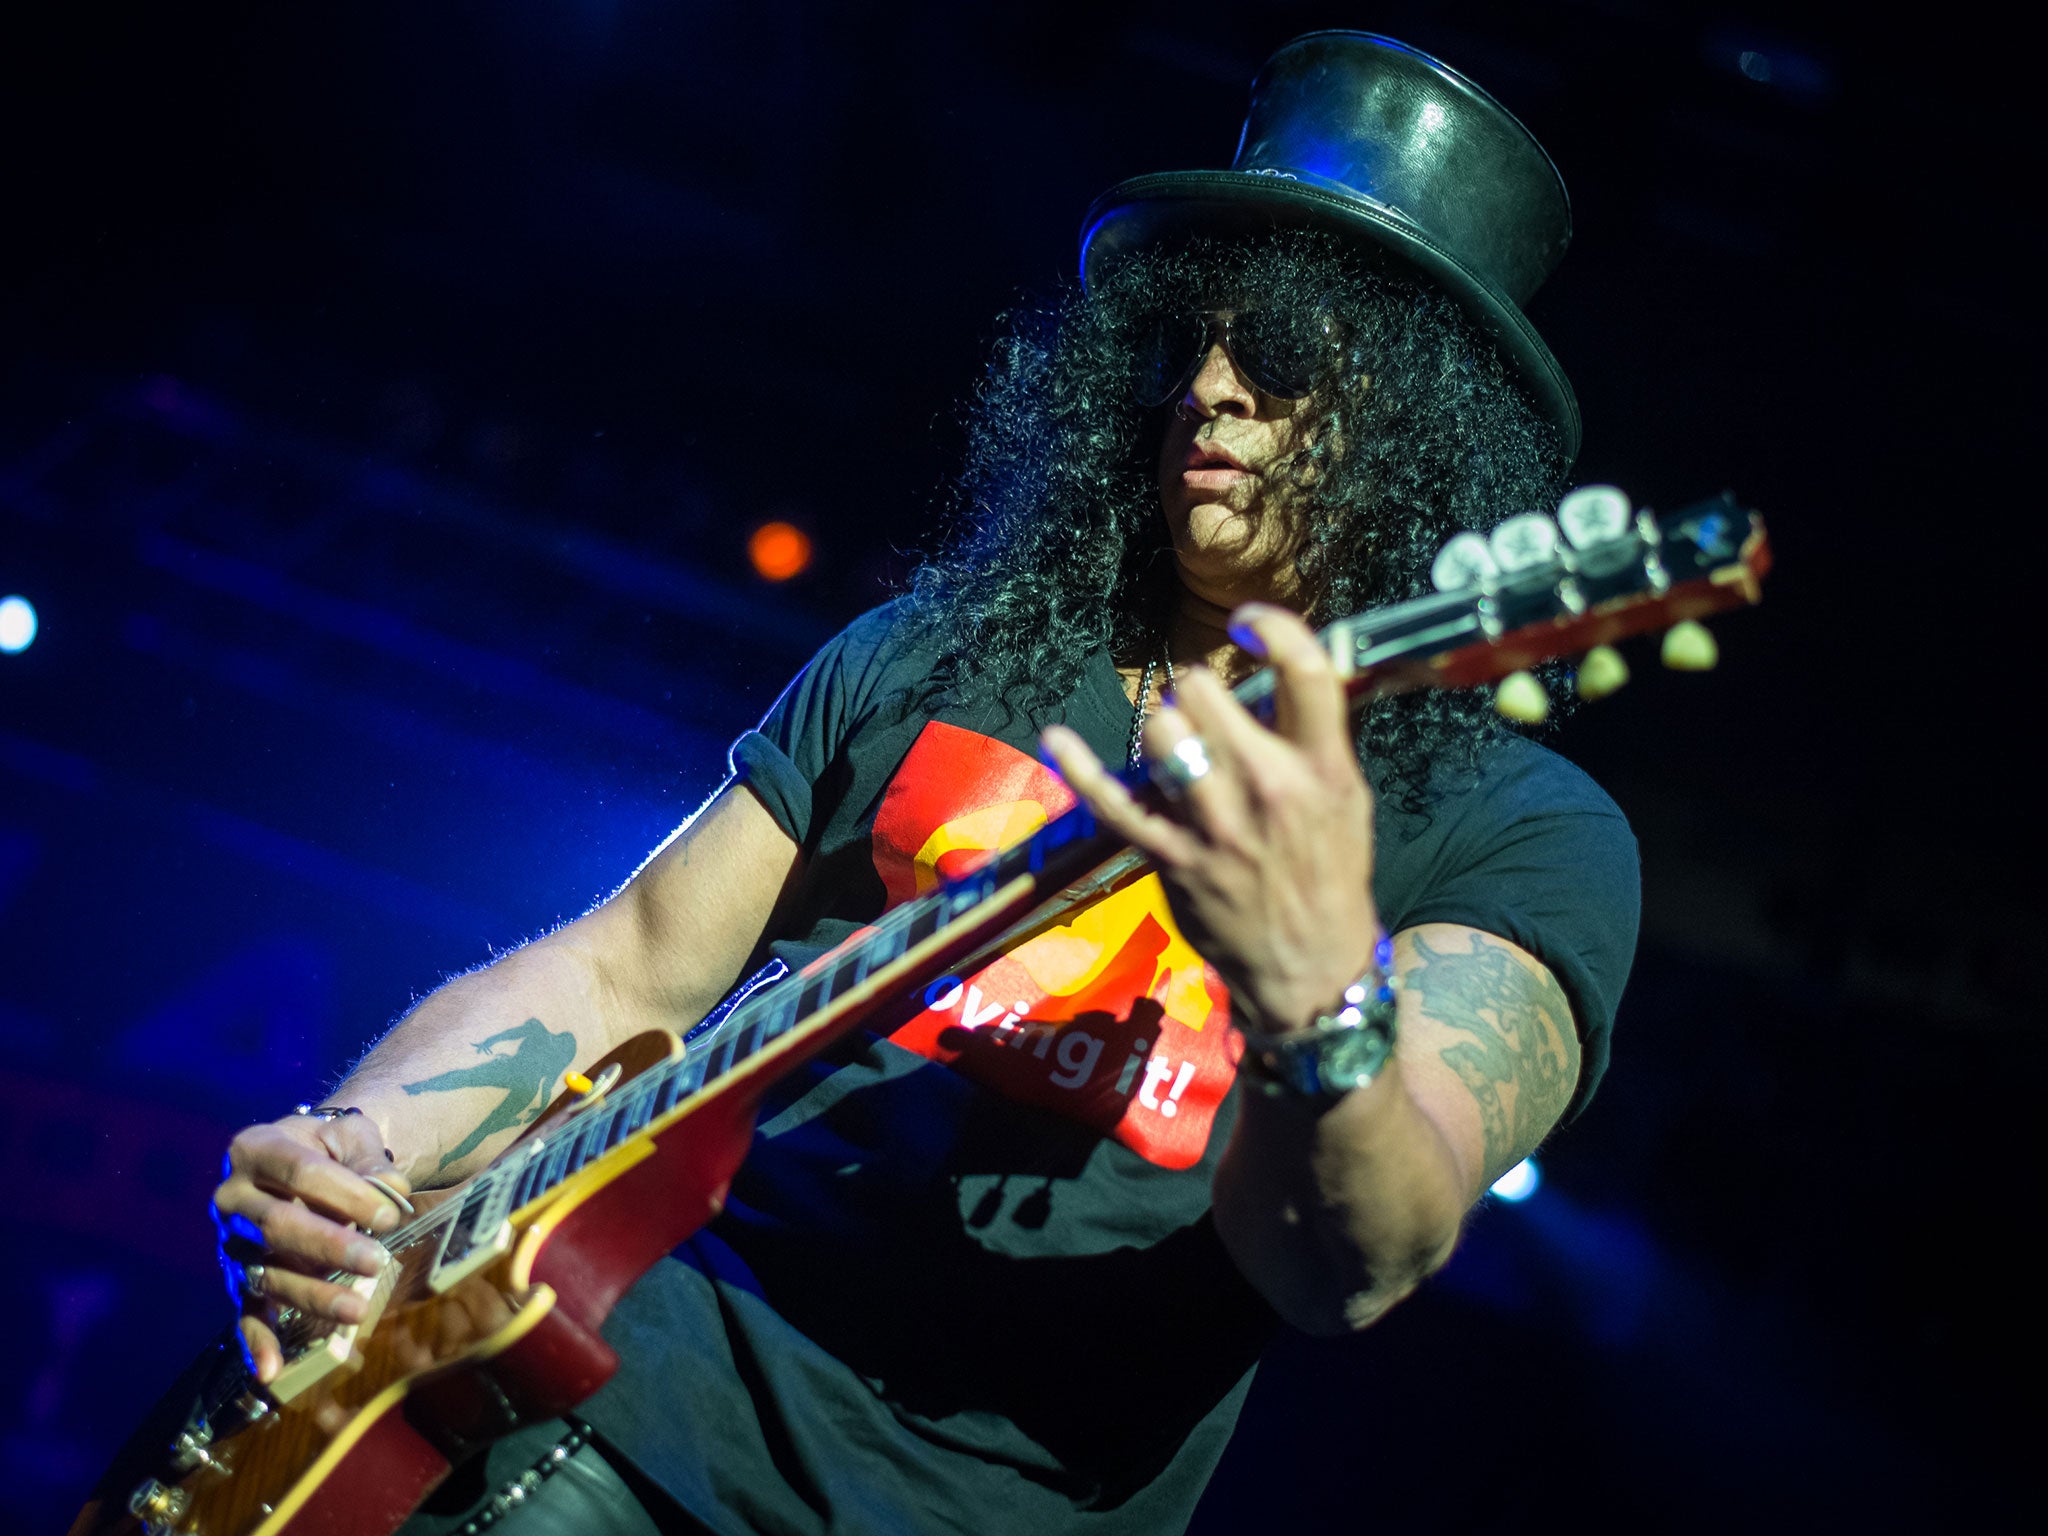 Slash performs on stage during a concert in Ljubljana